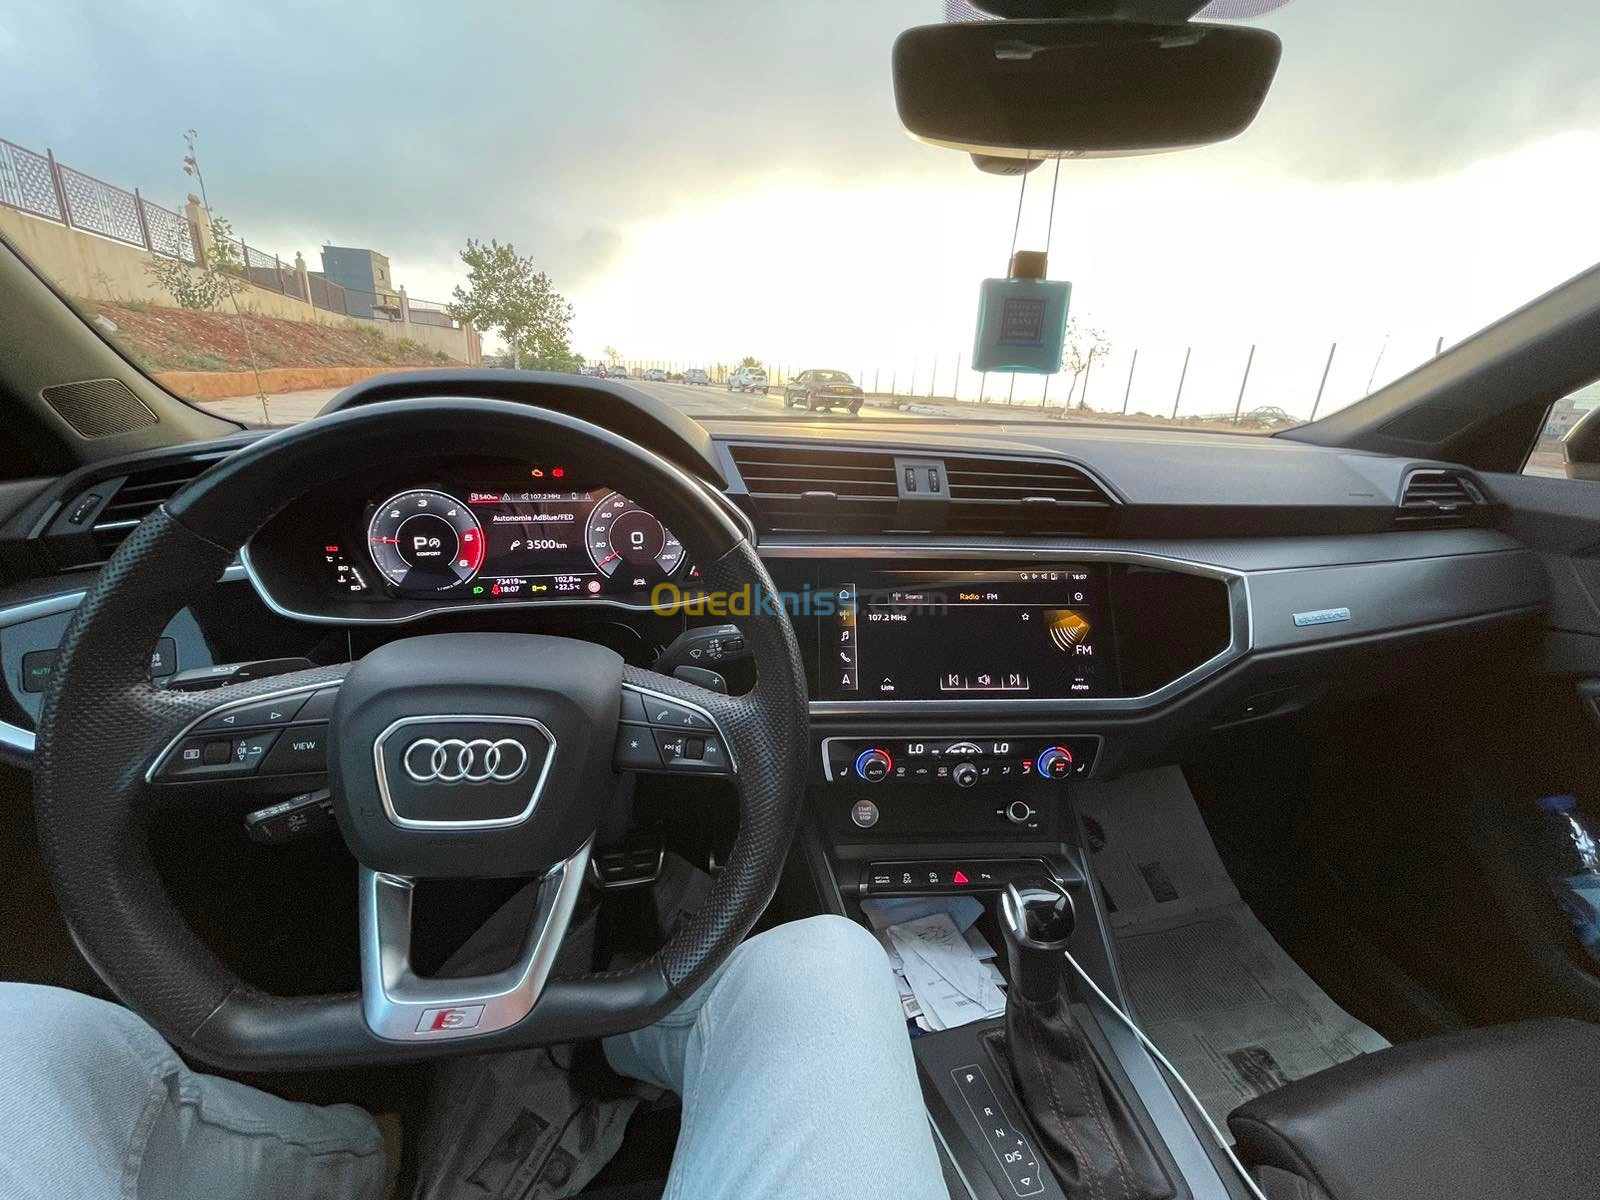 Audi Q3 2020 S Line (facelift)